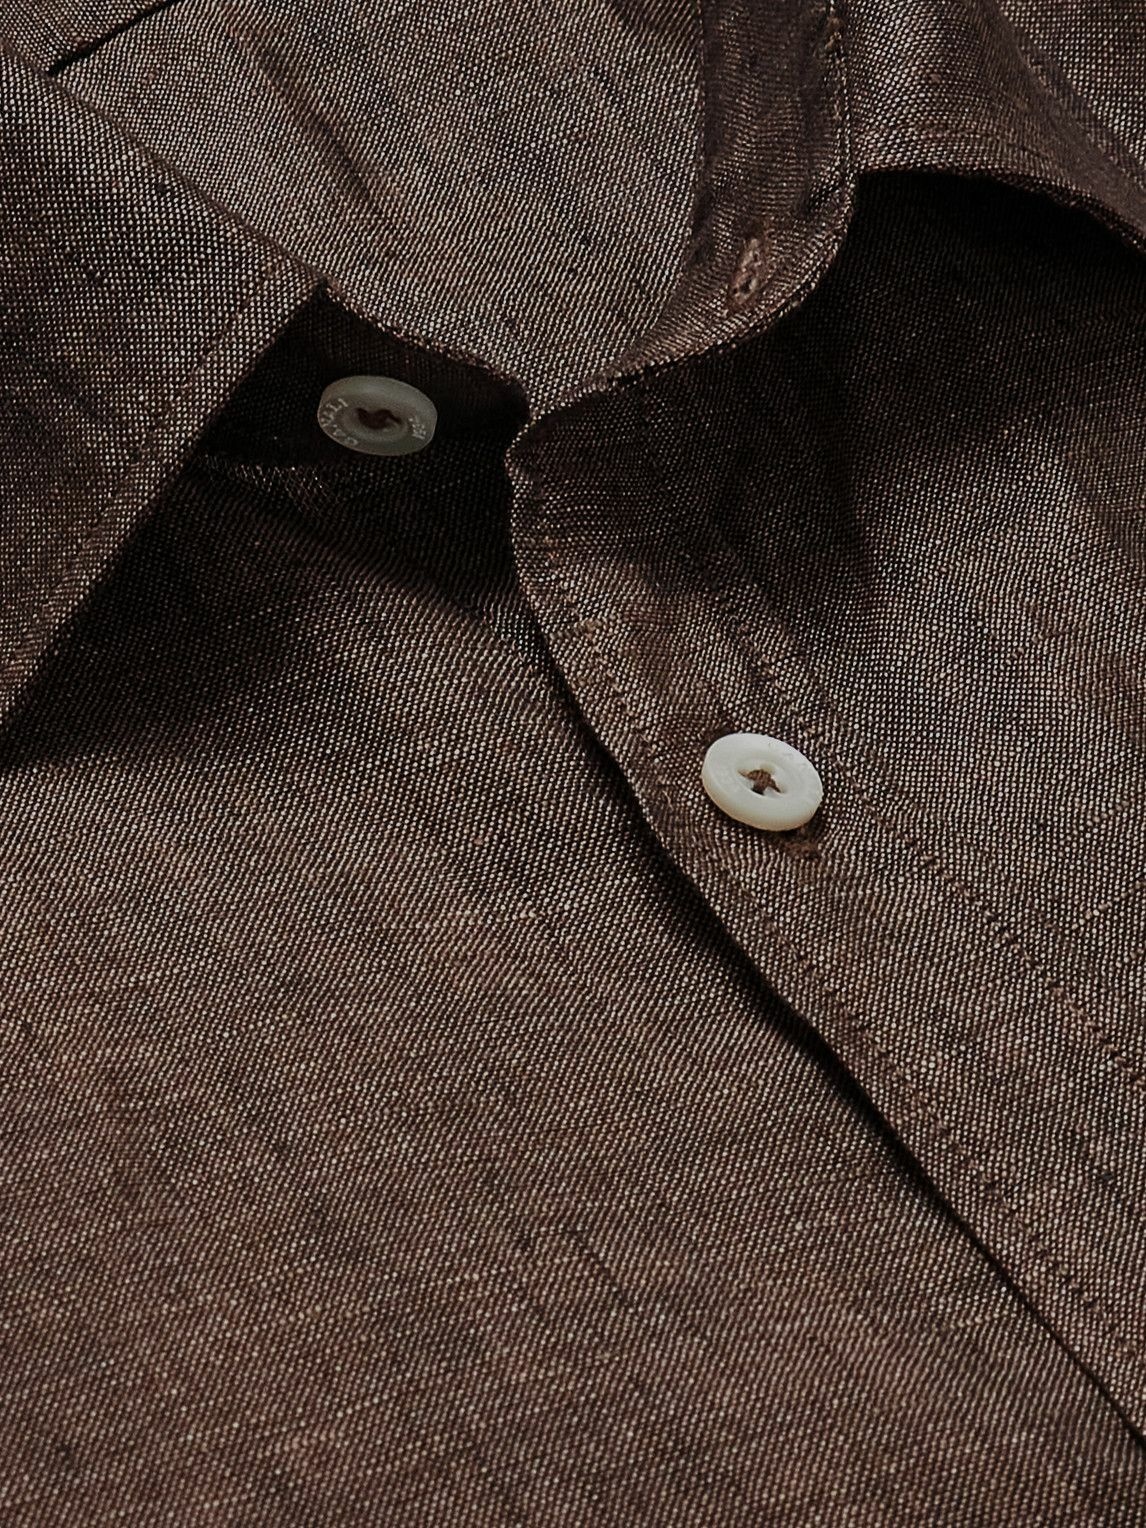 Canali - Linen Shirt - Brown Canali